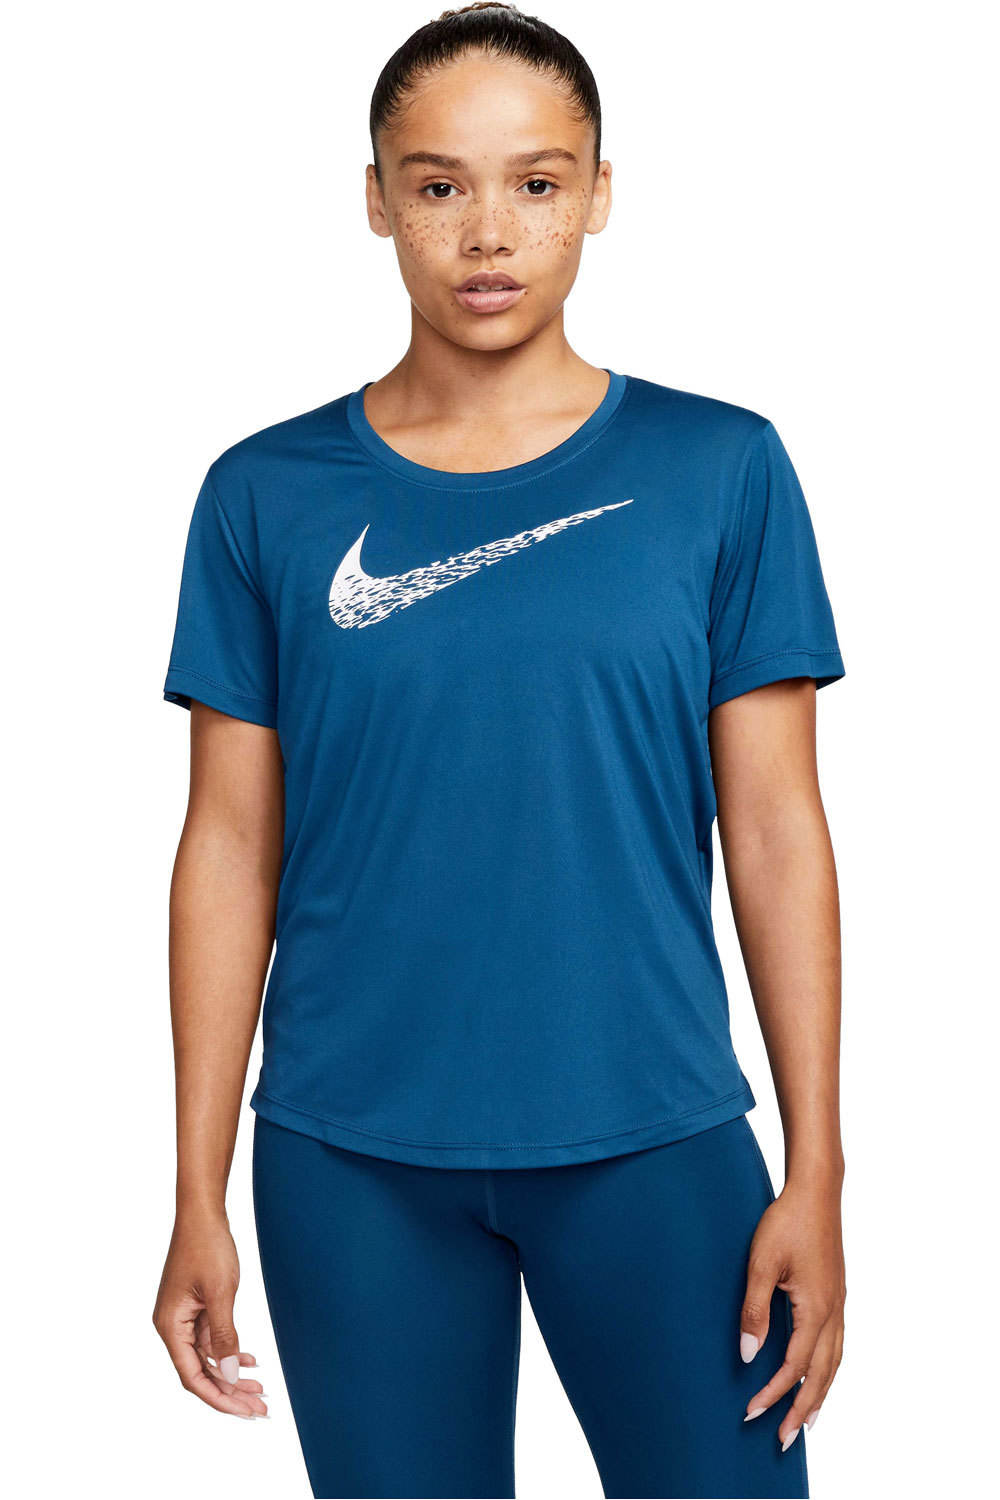 Nike camiseta entrenamiento manga corta mujer SWOOSH RUN SS TOP vista frontal